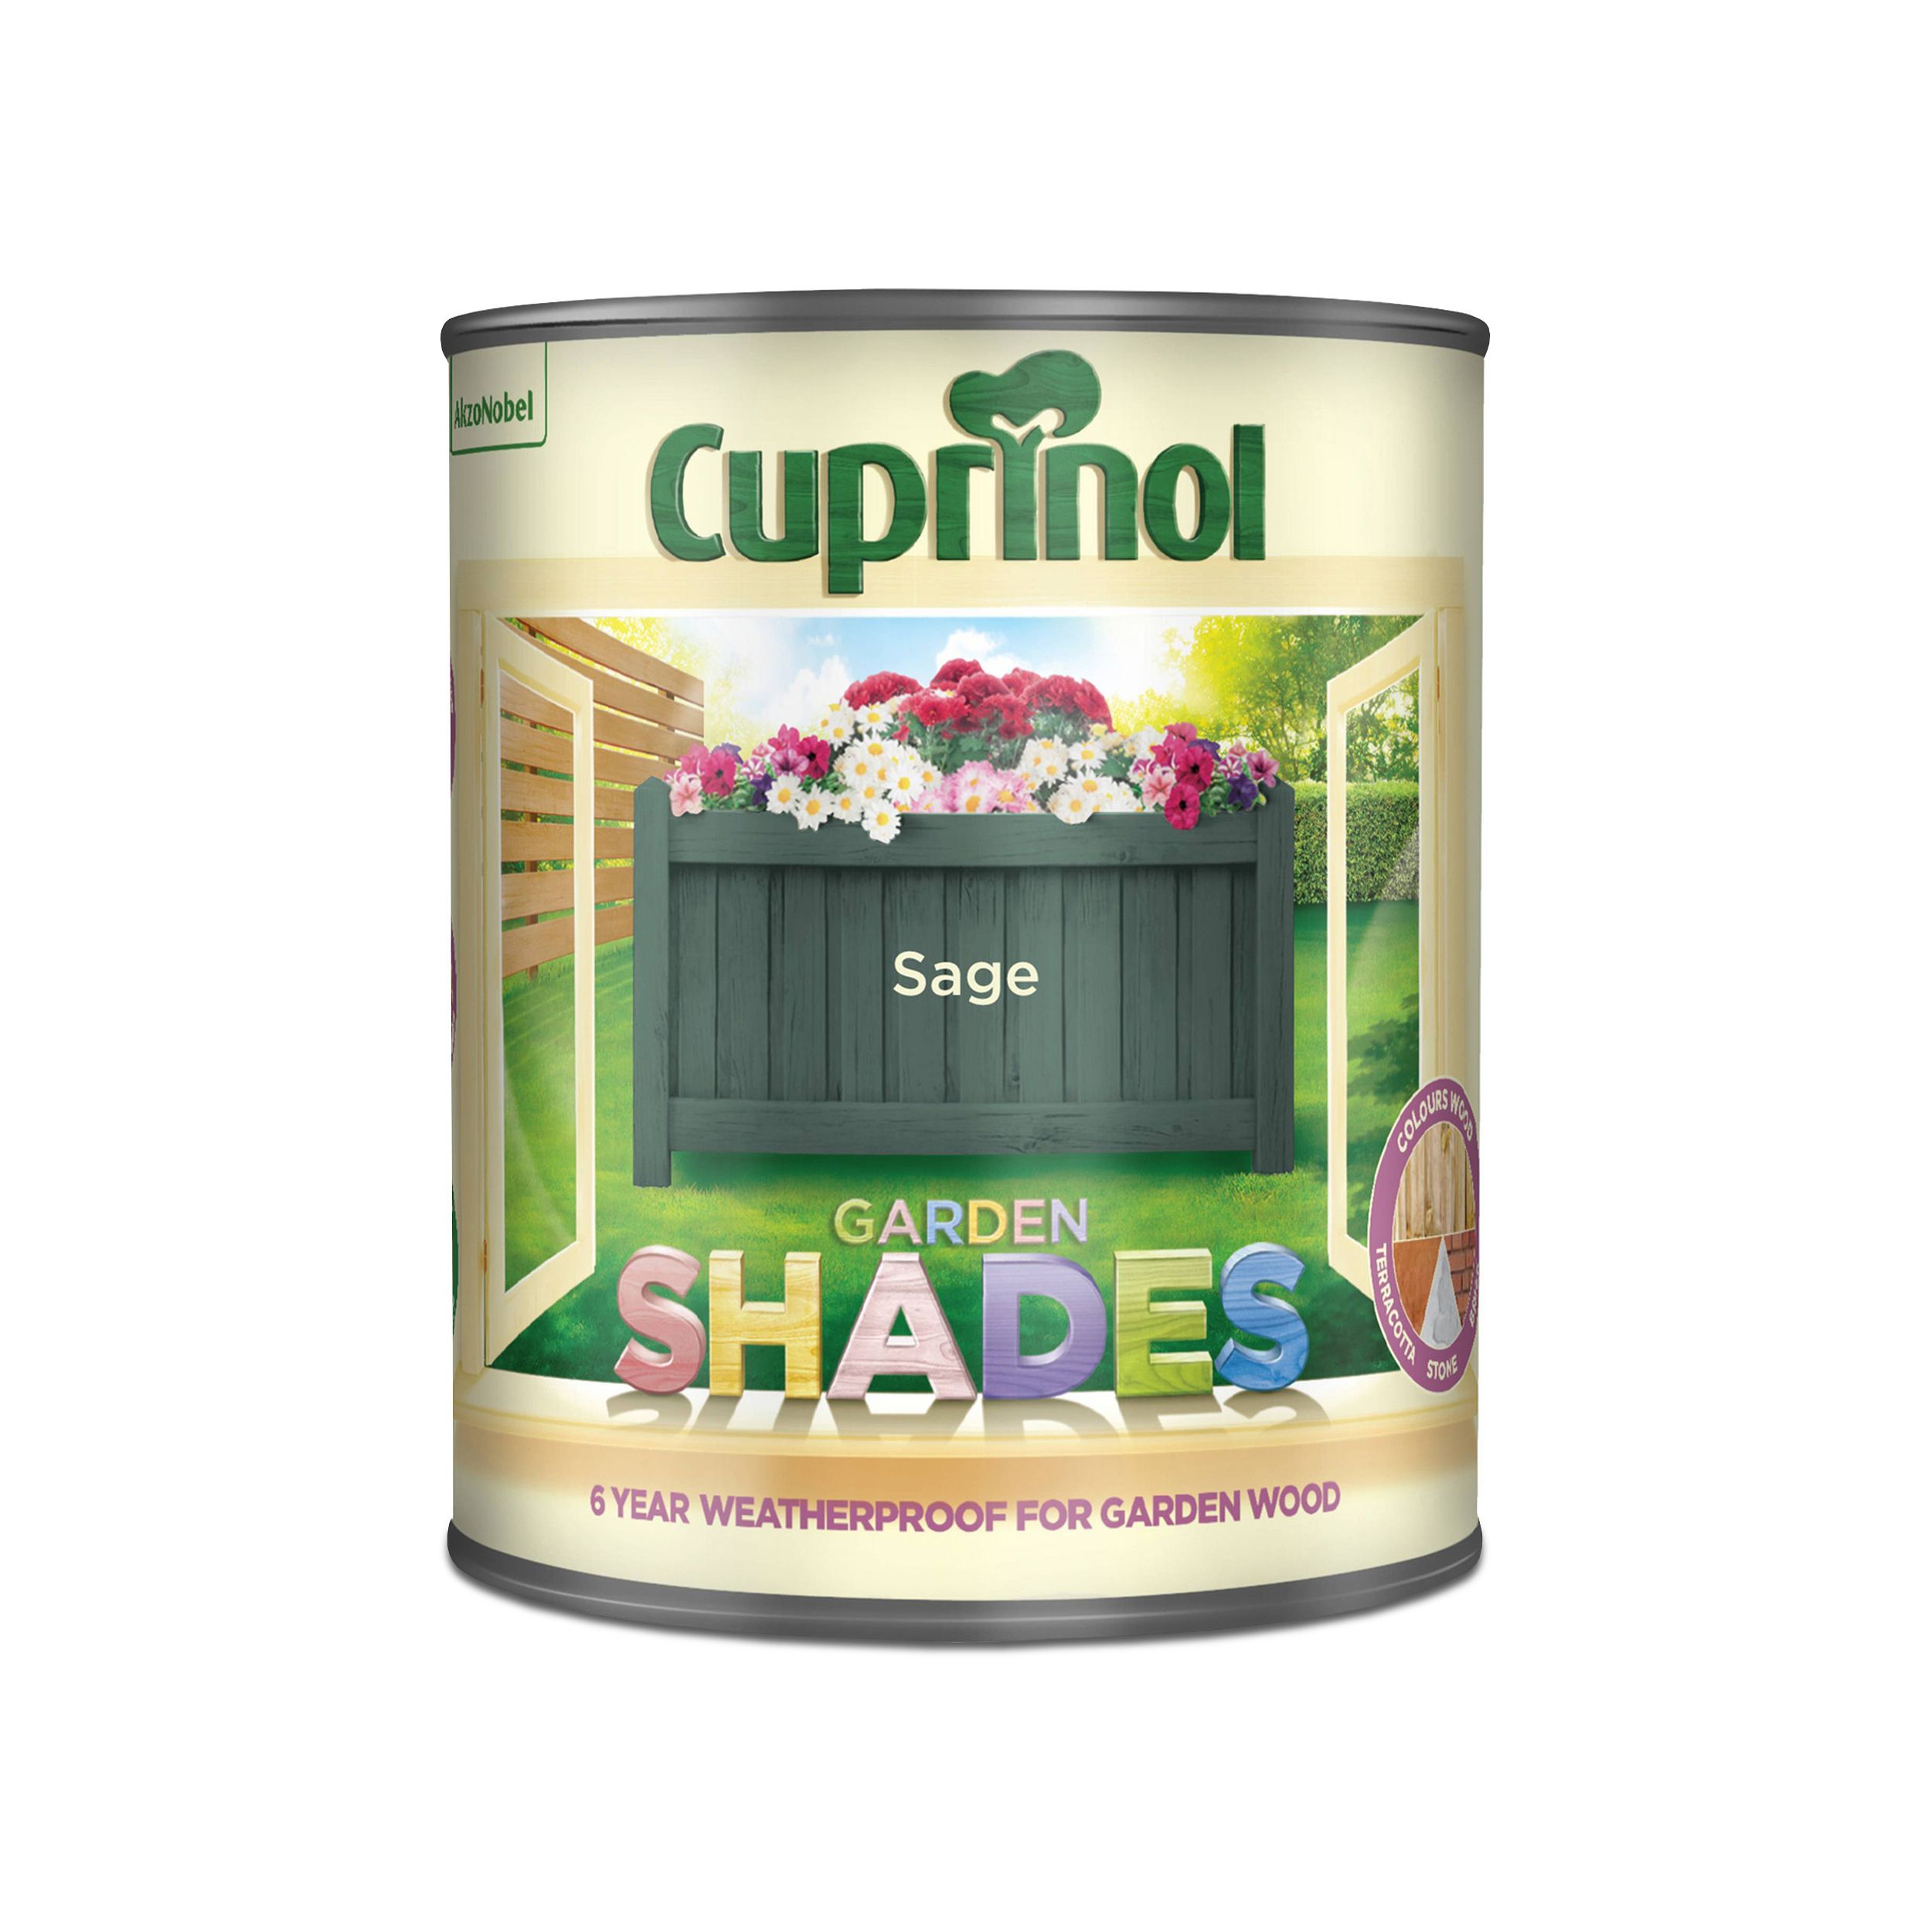 Cuprinol Garden shades Sage Matt Multi-surface Exterior Wood paint, 1L